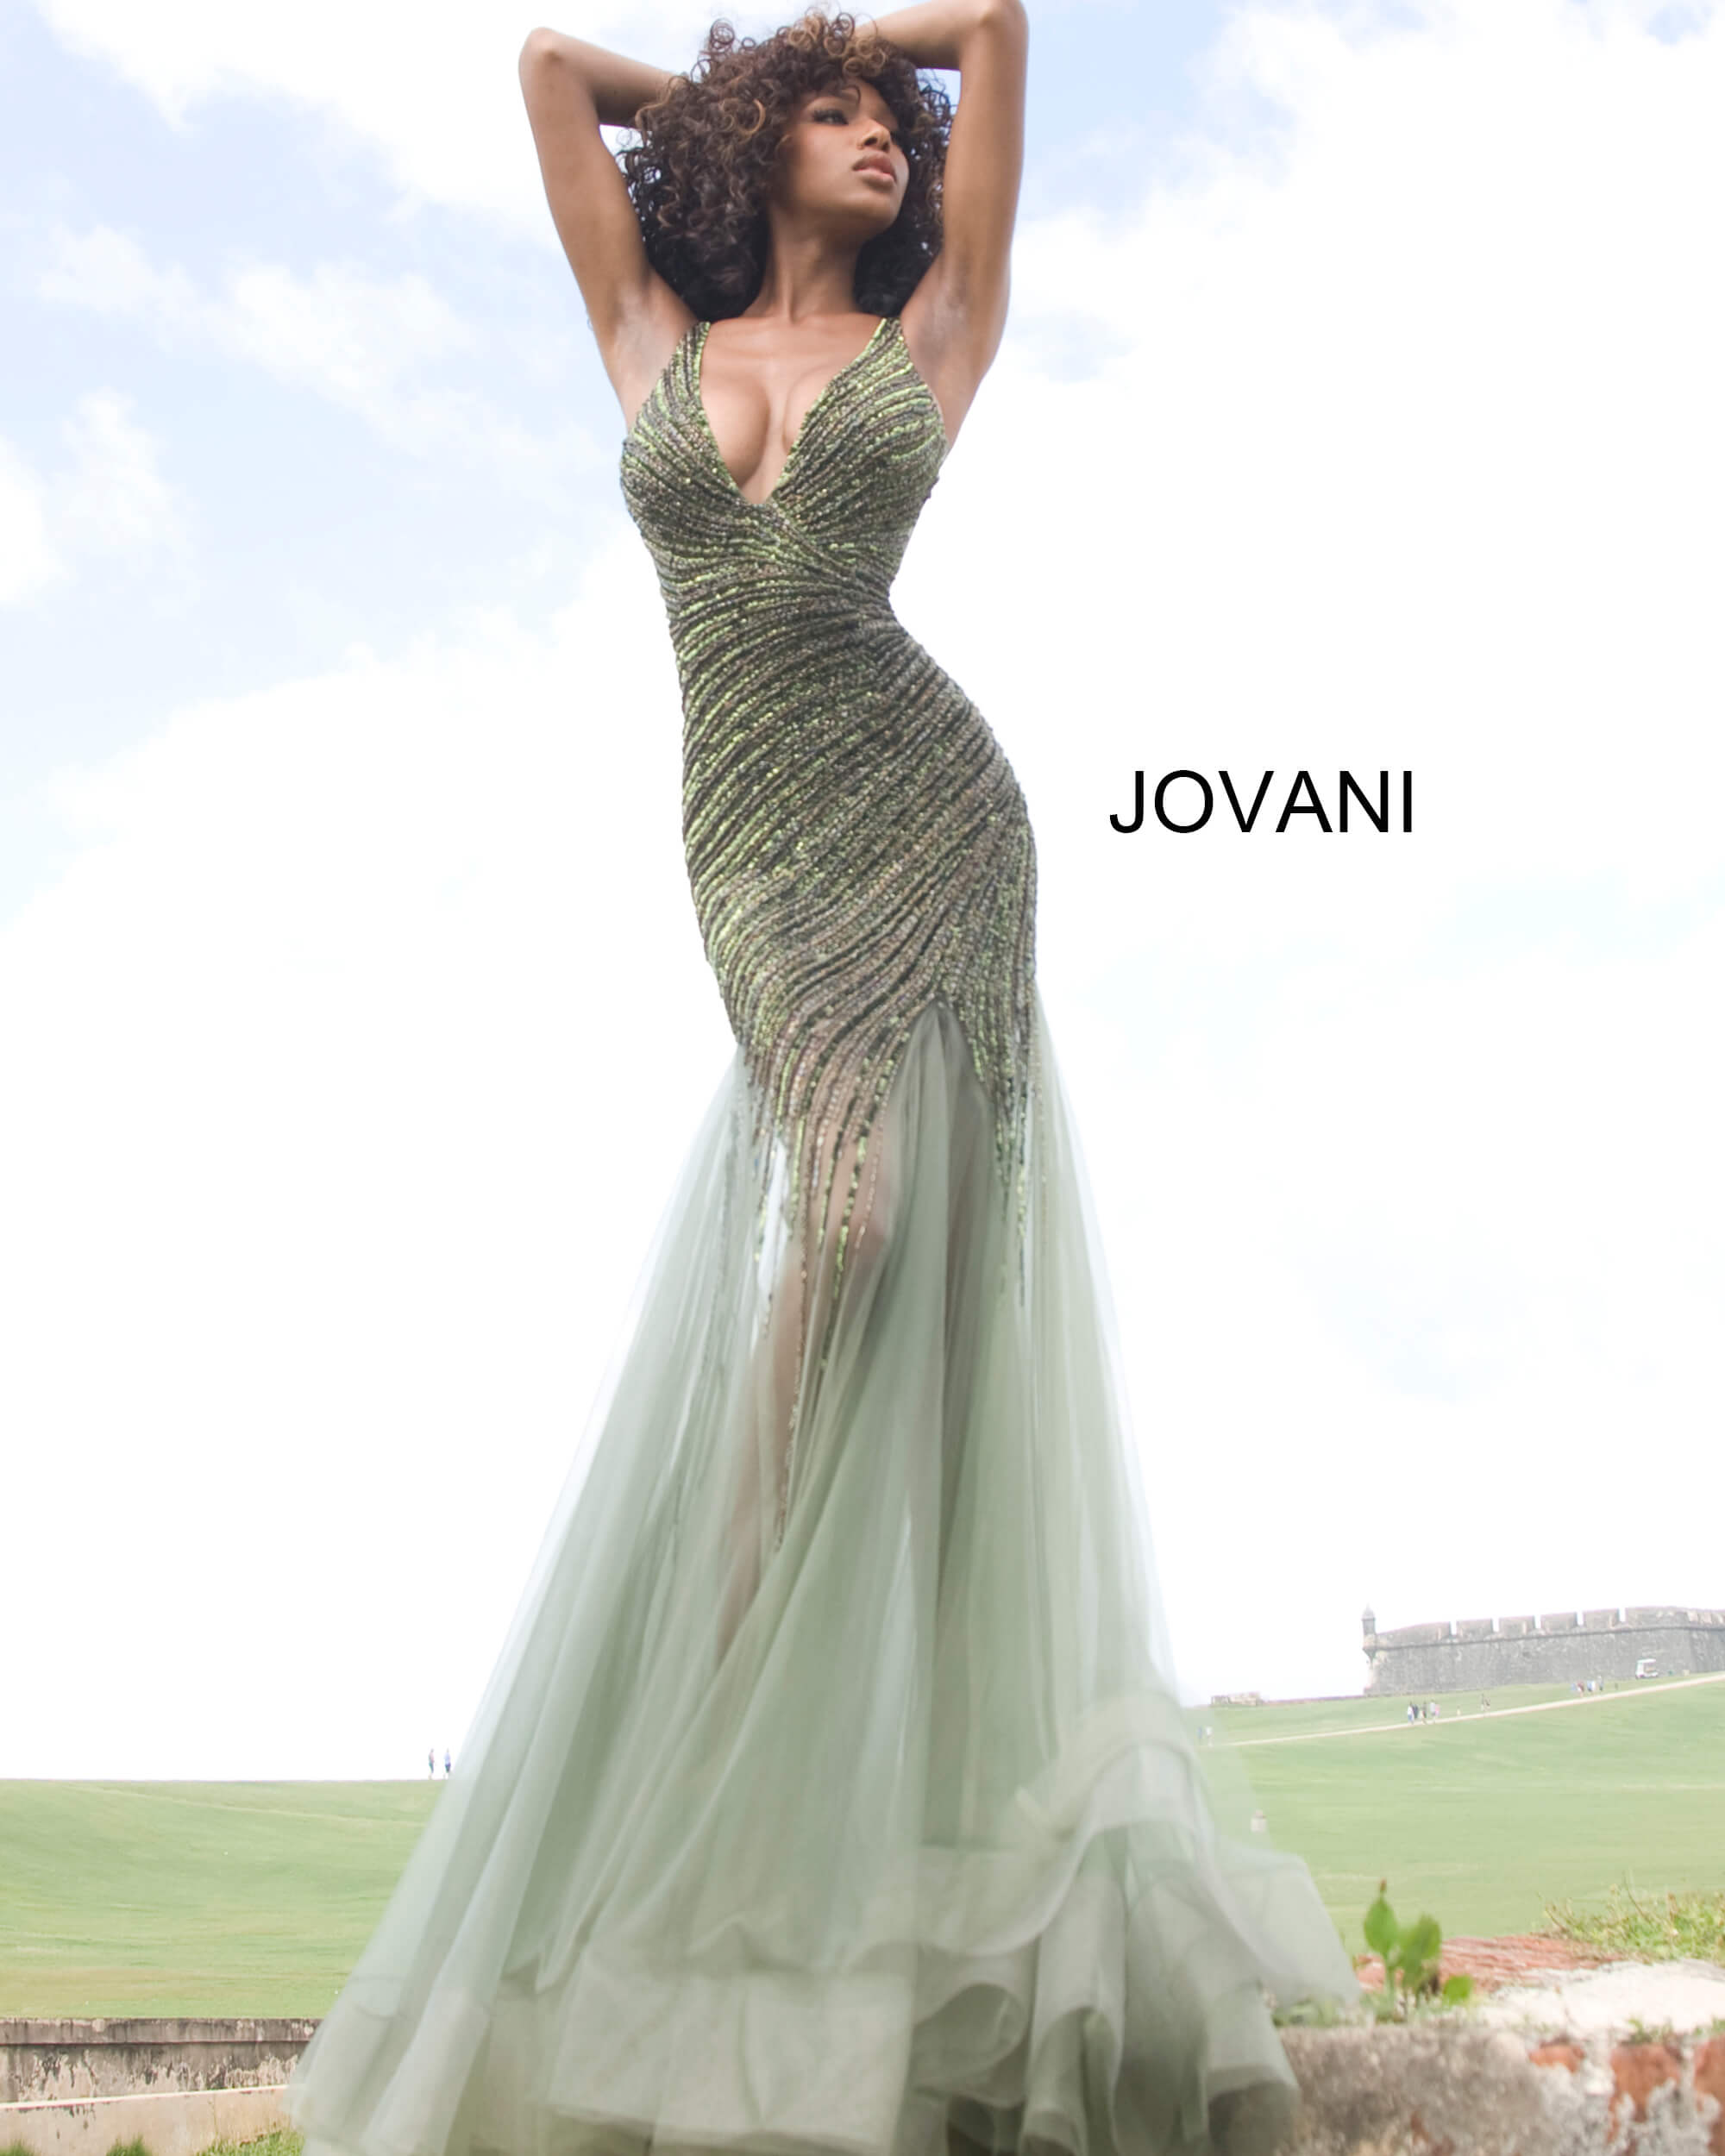 Jovani 4741 Beaded Mermaid Prom Gown